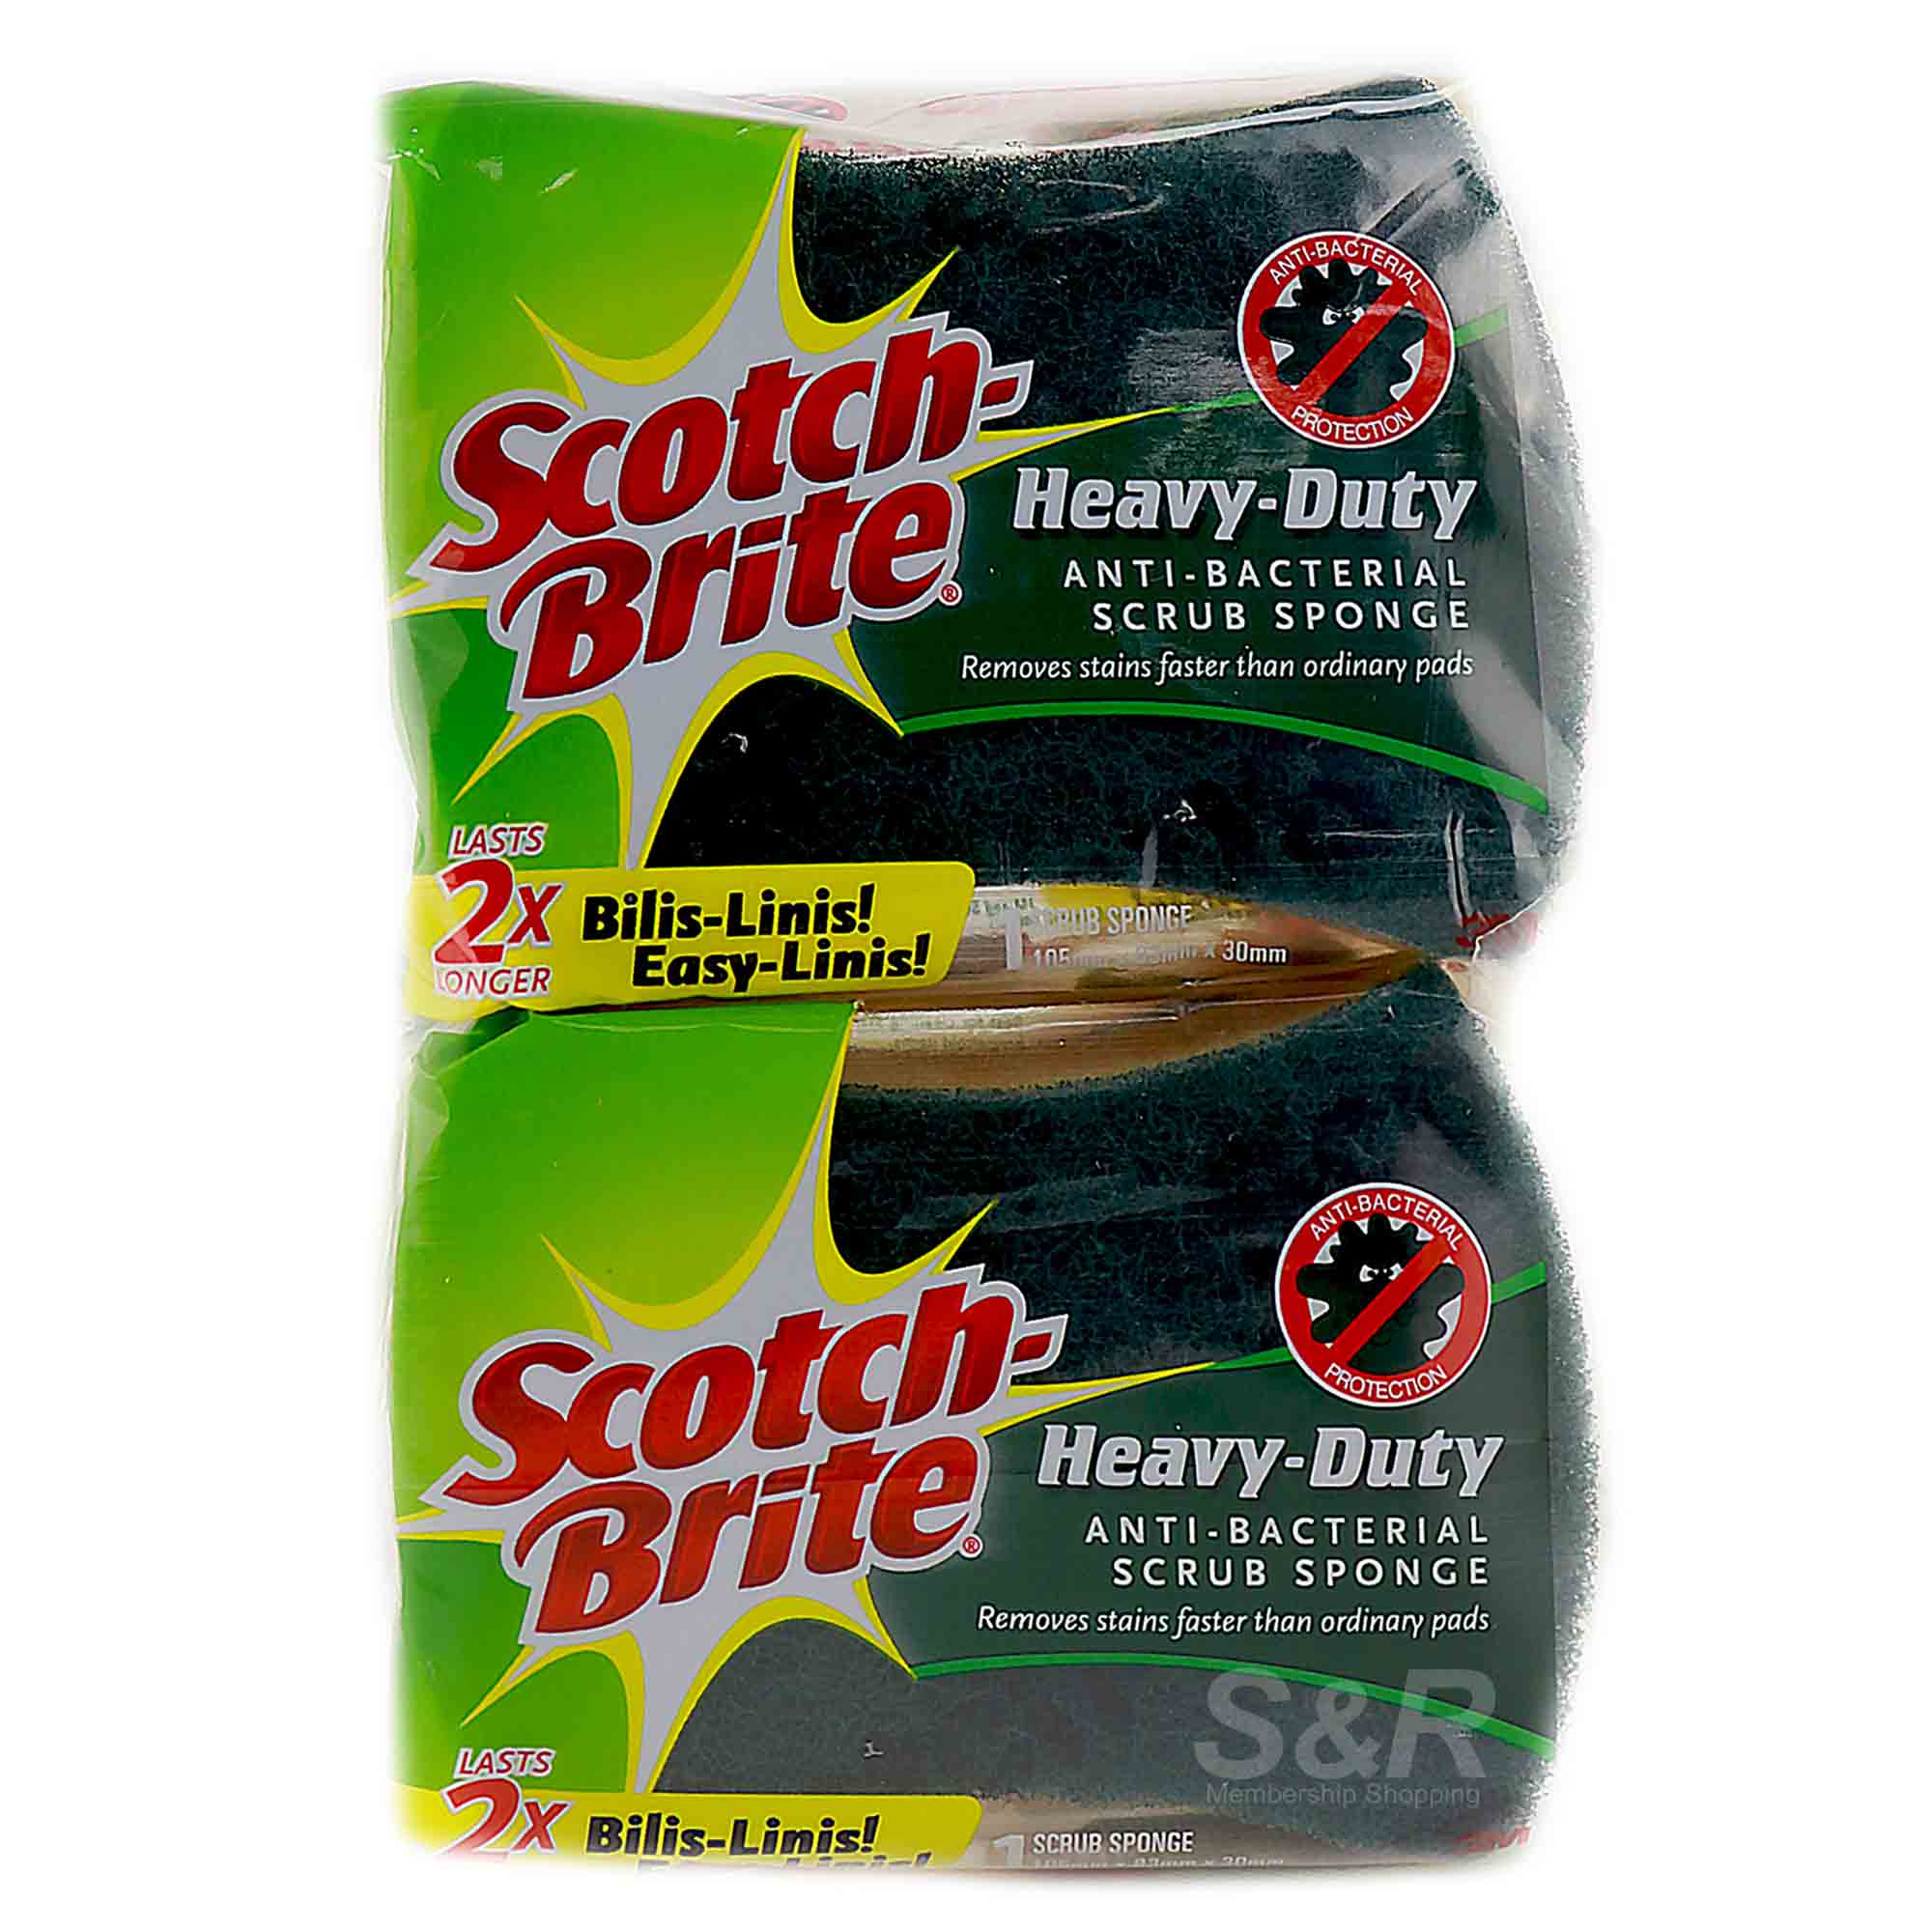 Scotch-Brite Heavy Duty Antibacterial Scrub Sponge 4pcs